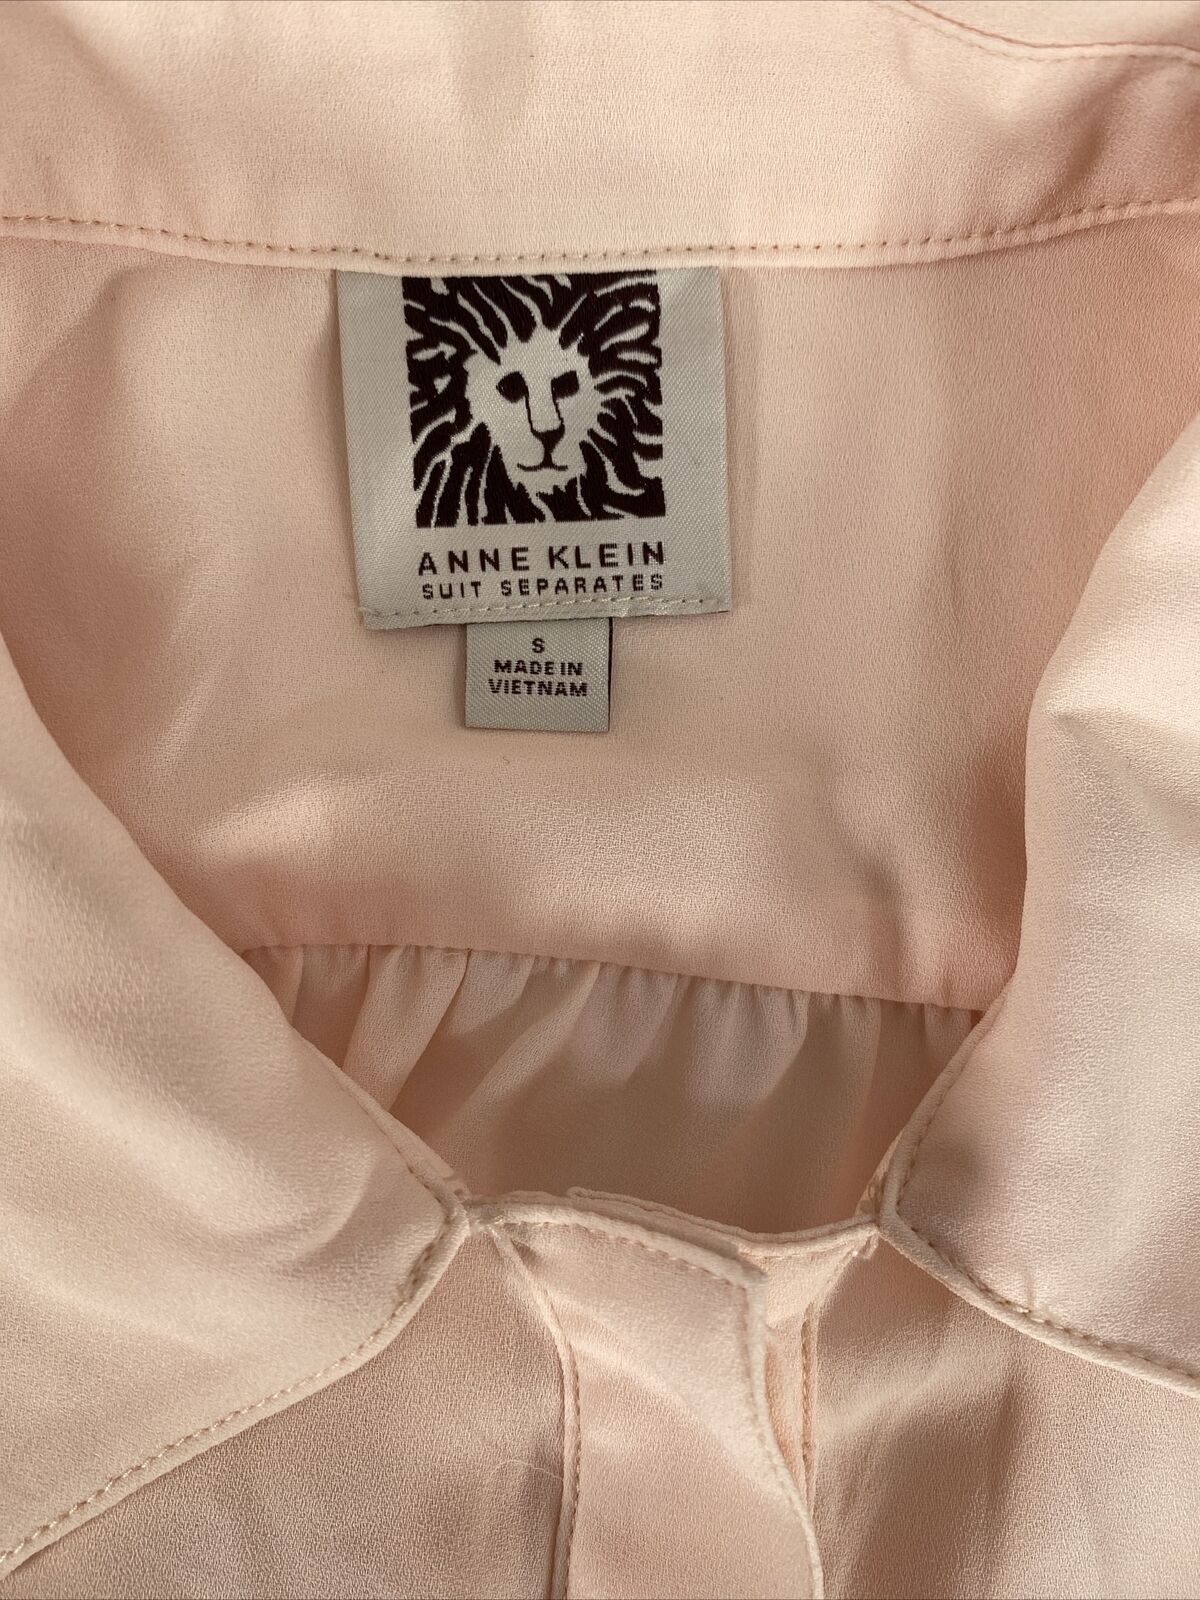 Anne Klein Women's Pink Sheer Sleeveless Button Up Blouse - S